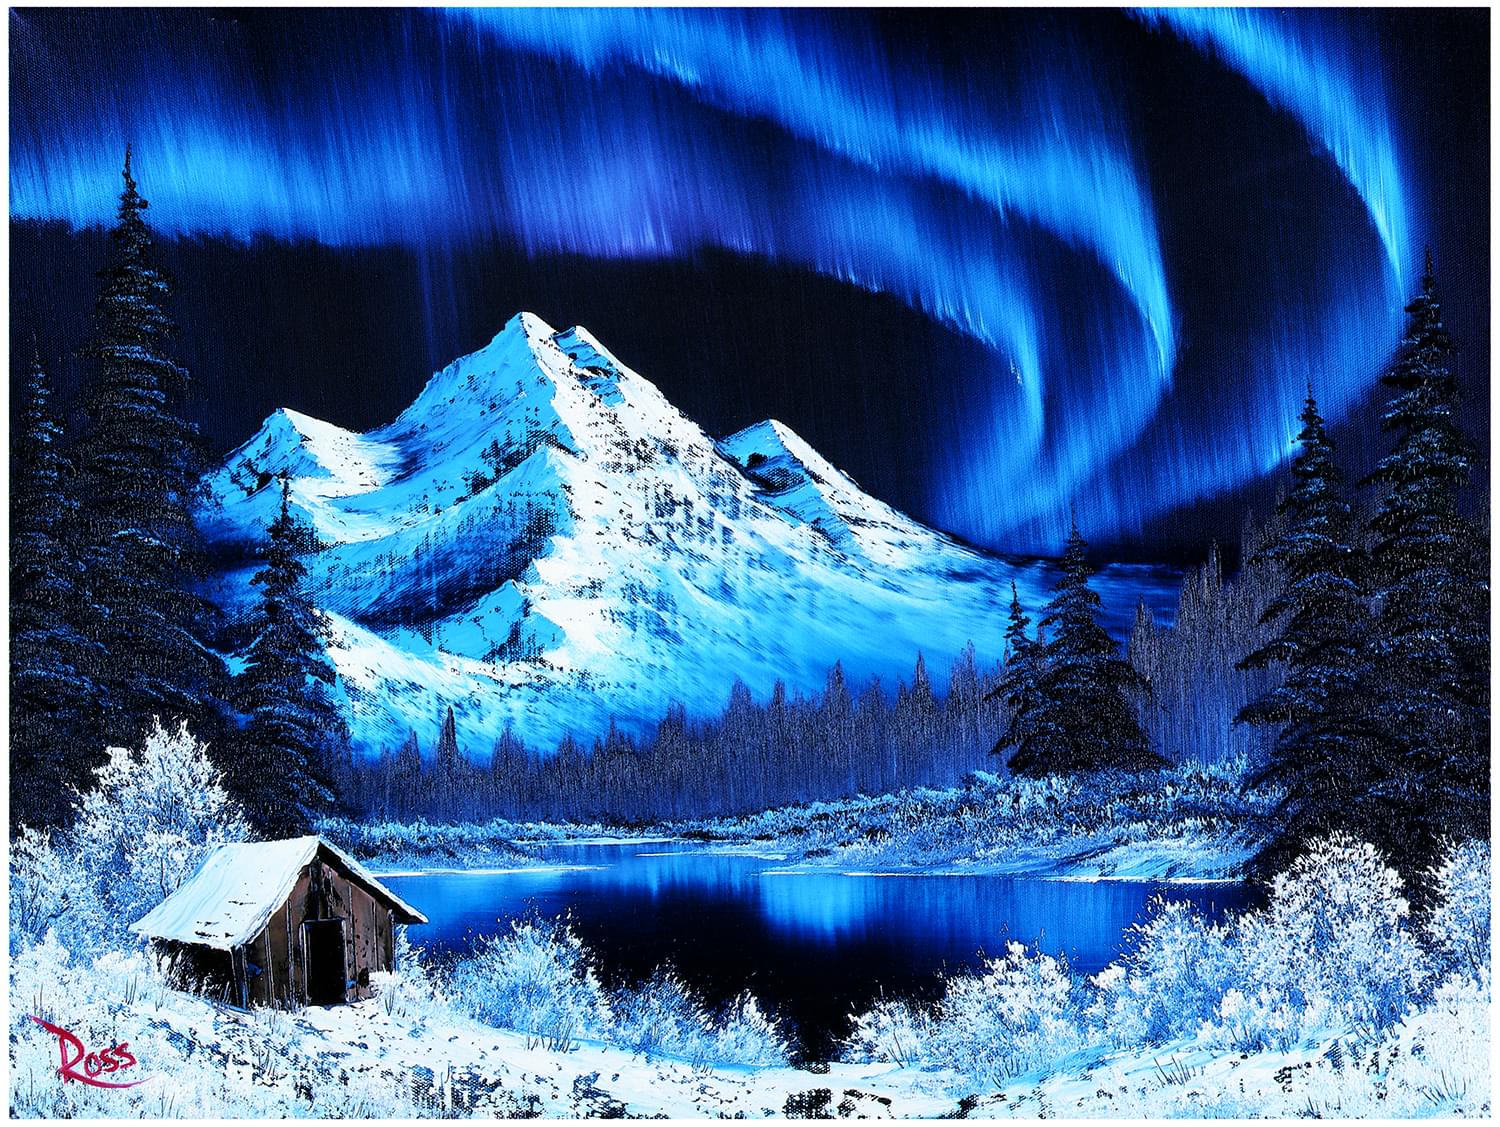 Bob Ross Northern Lights Aurora Borealis Puzzle | 1000 Piece Jigsaw Puzzle